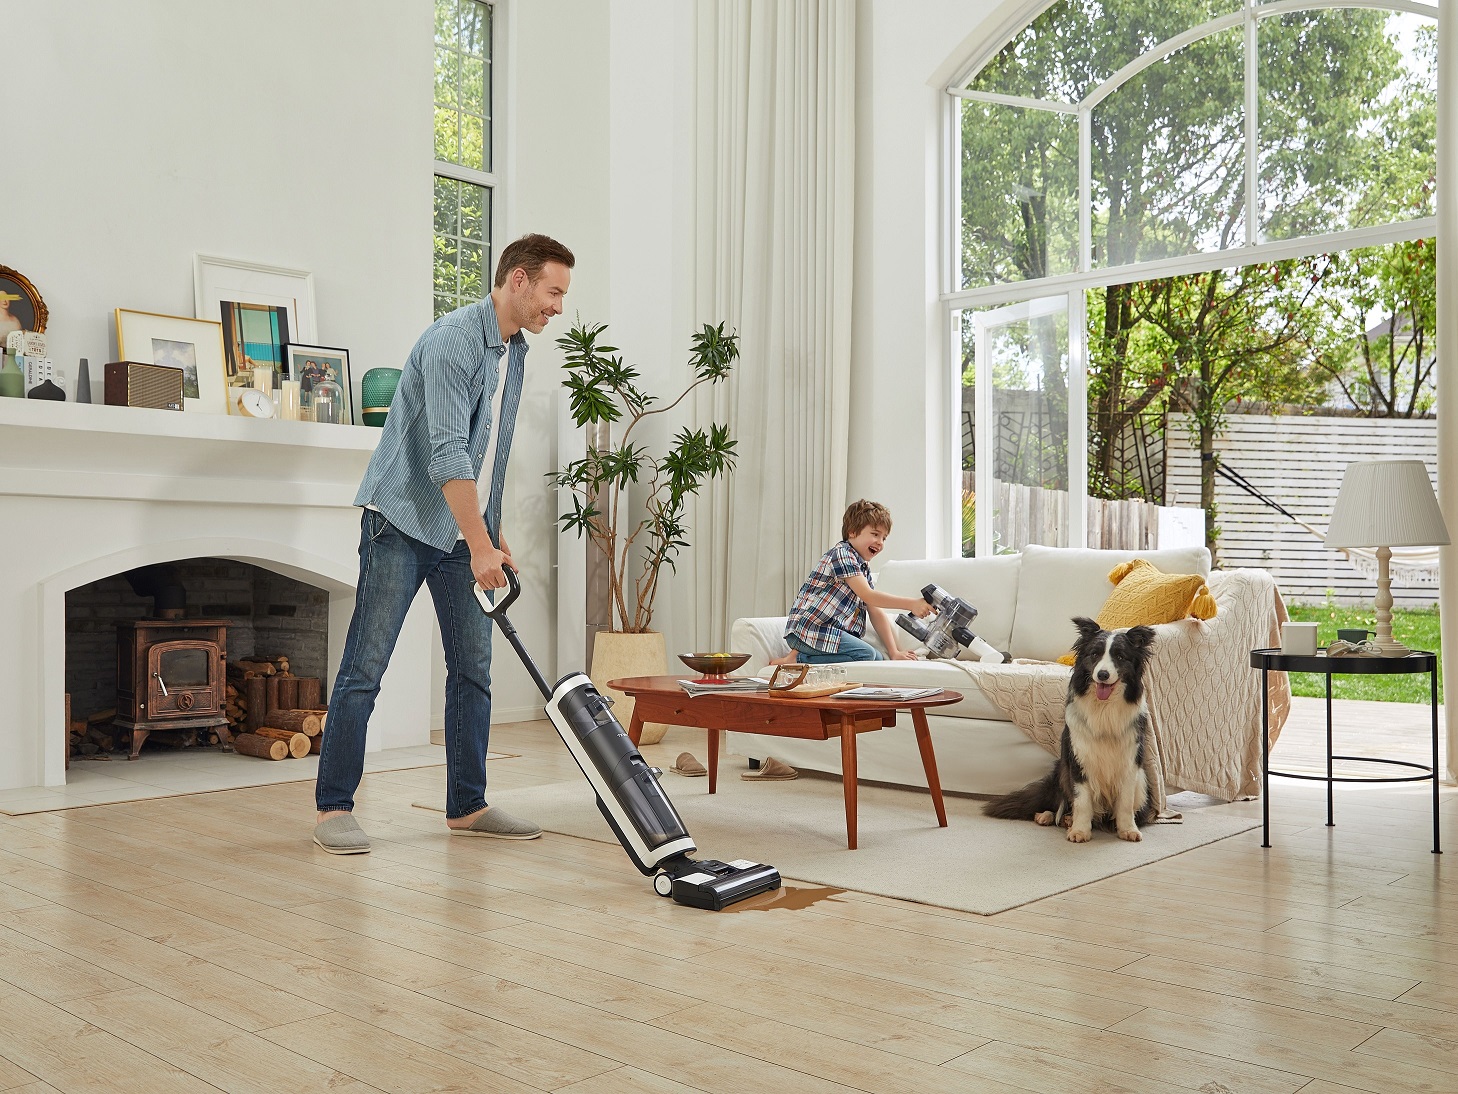 Prime Day Bestseller: Tineco Cordless Hardwood Floors Cleaner